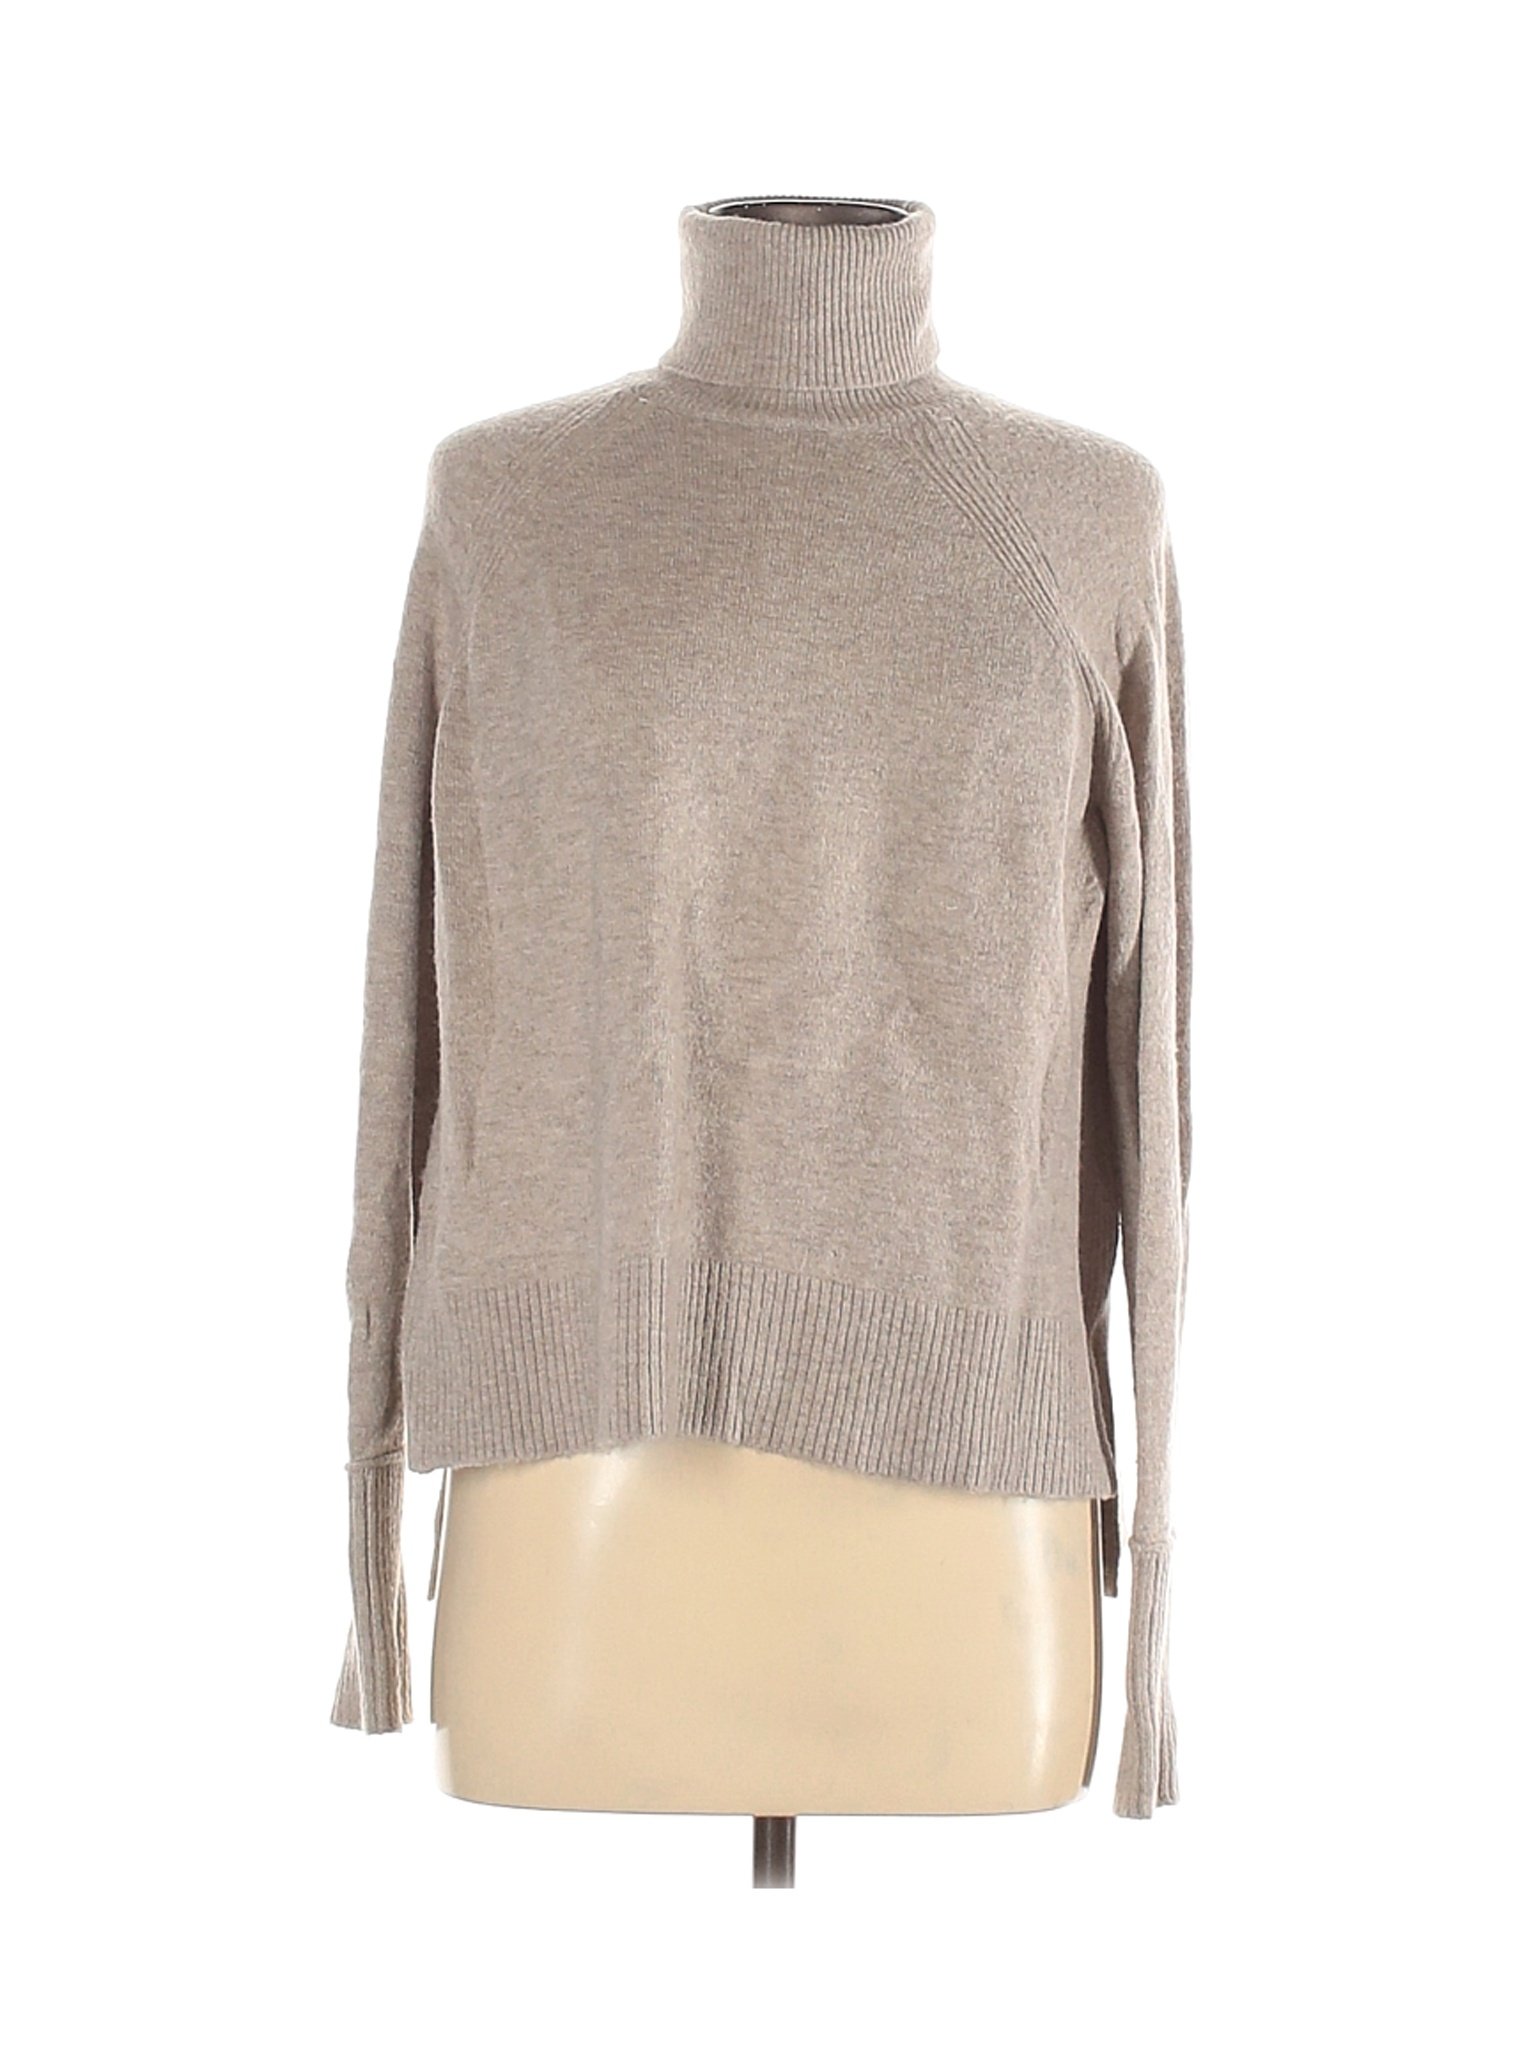 J.Crew Women Brown Turtleneck Sweater M | eBay